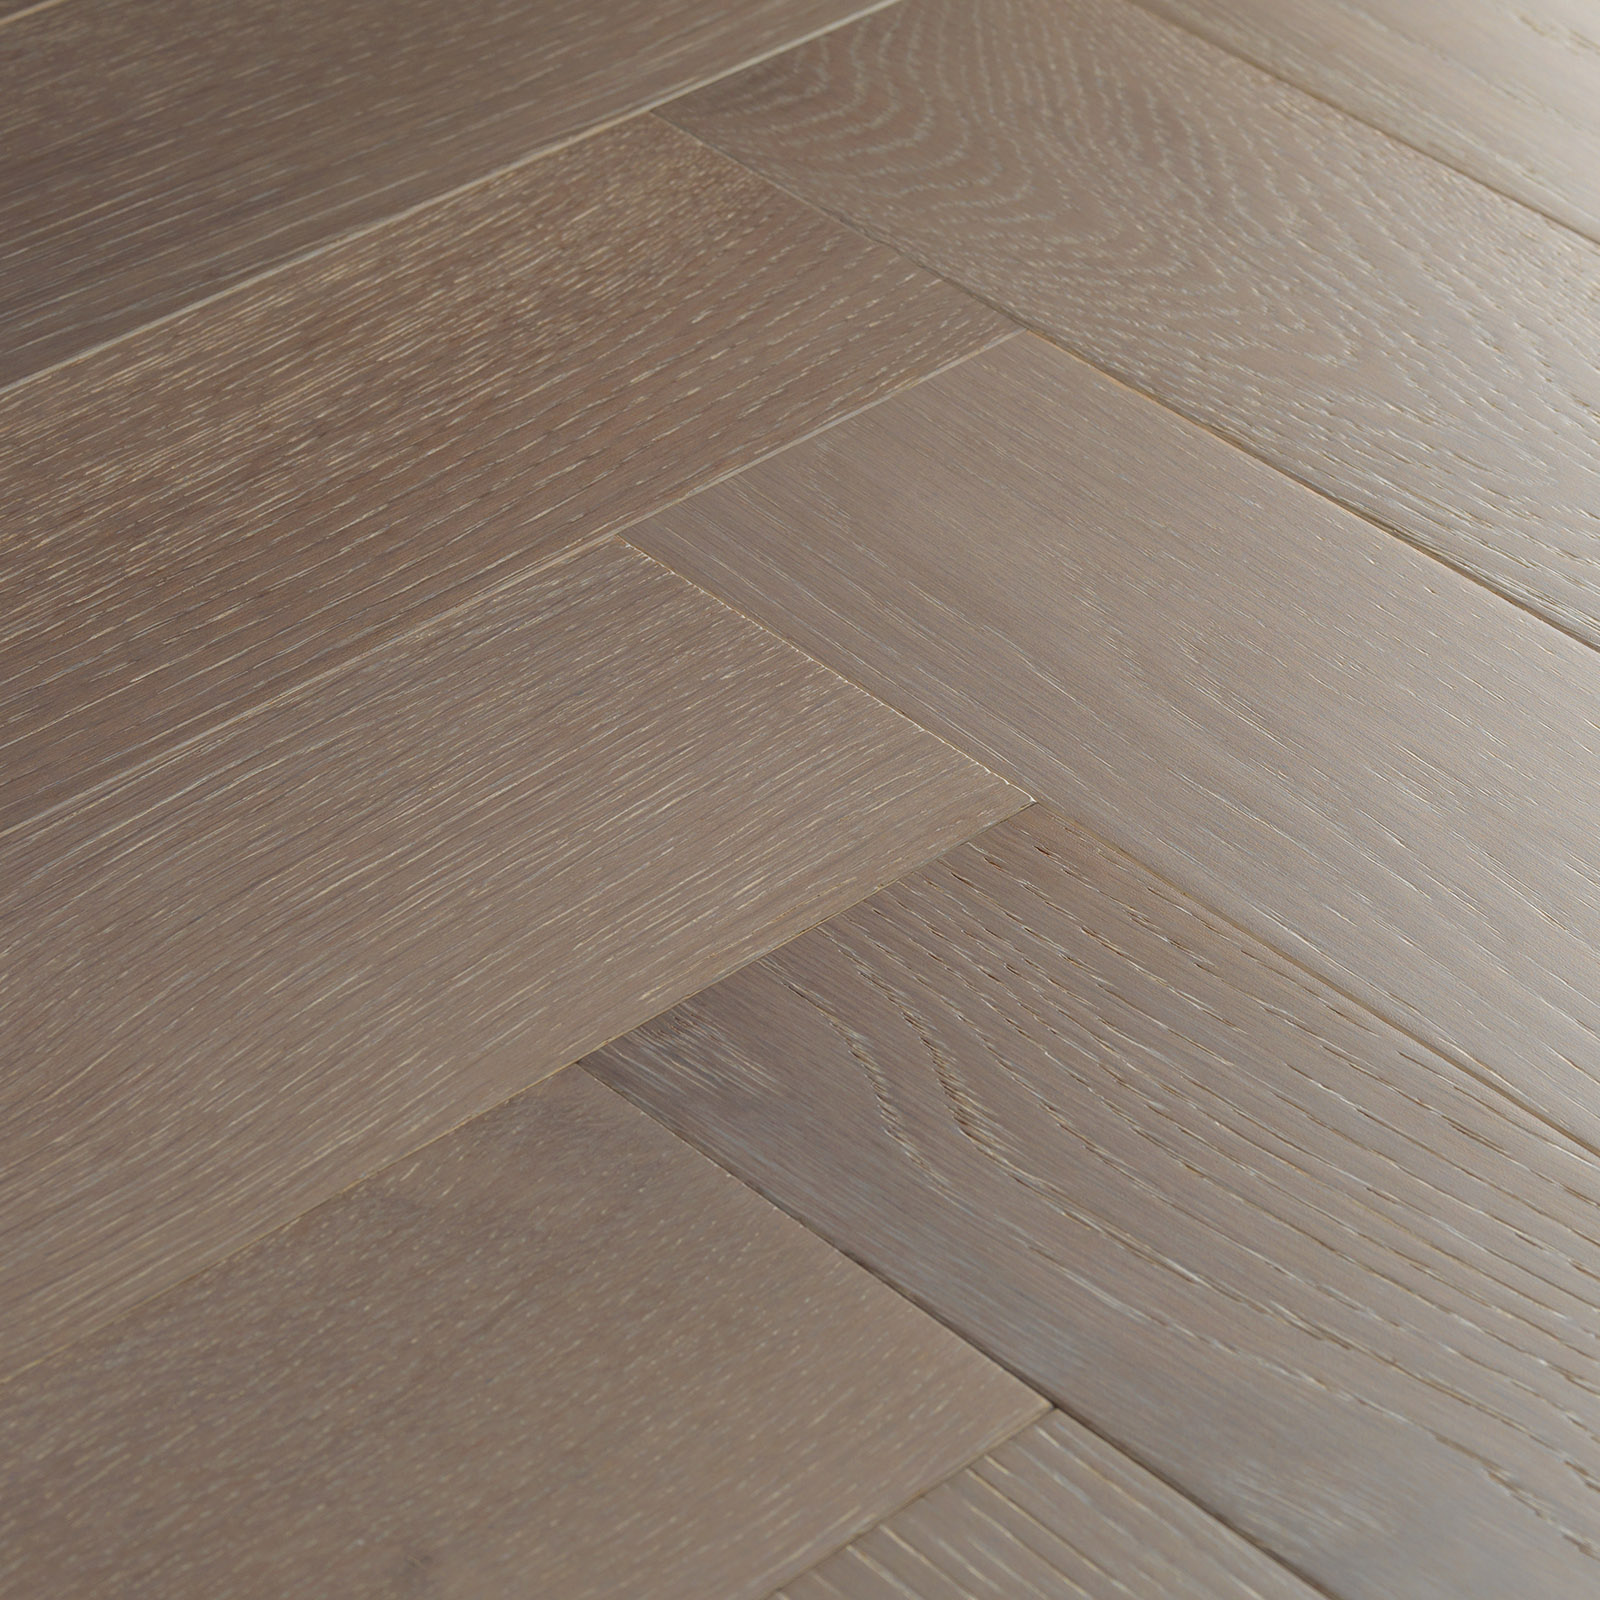 Engineered herringbone wood flooring. Goodrich Feather Oak